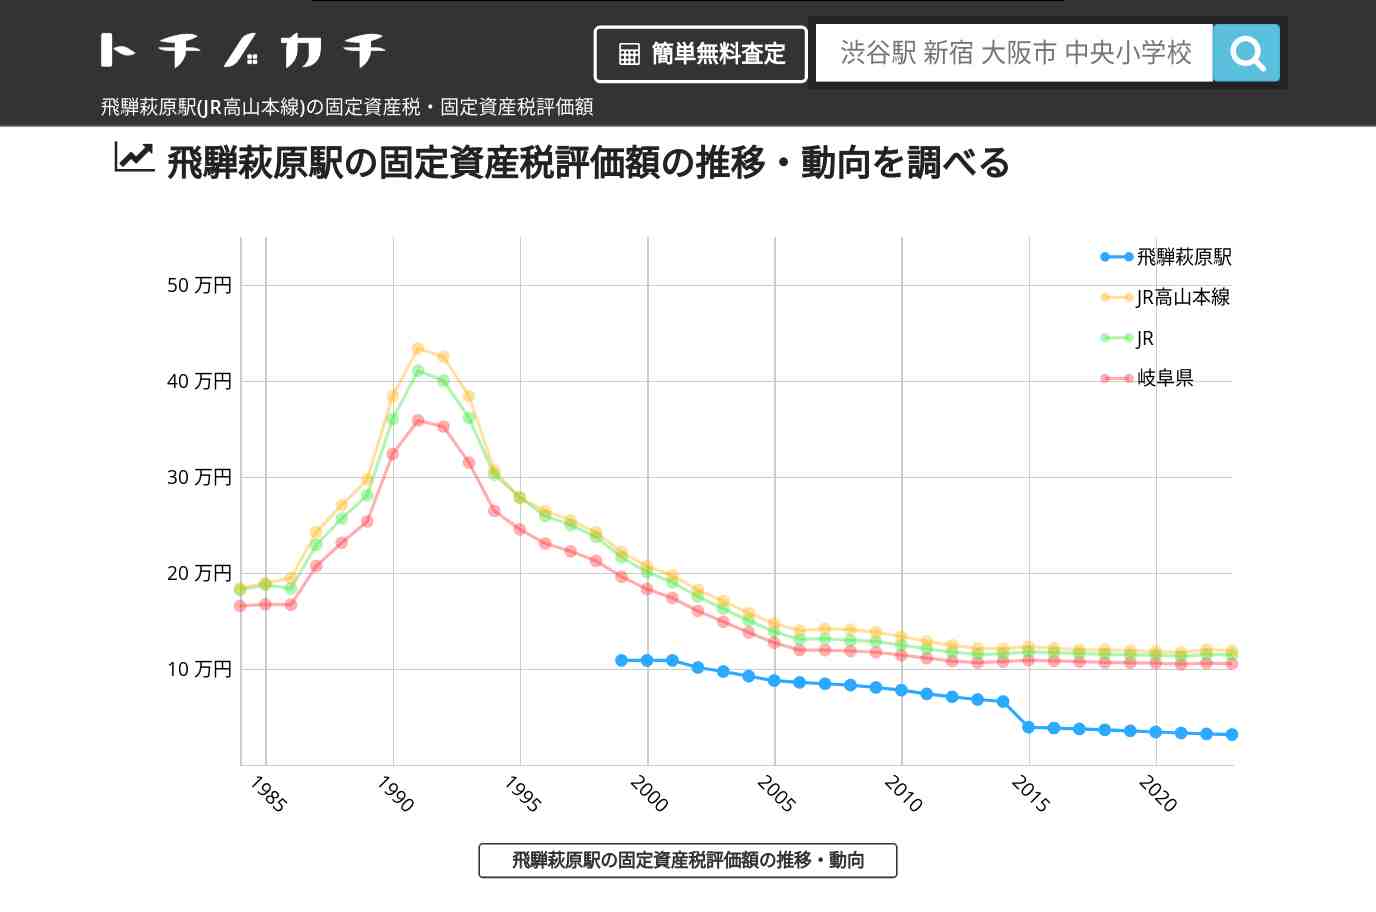 飛騨萩原駅(JR高山本線)の固定資産税・固定資産税評価額 | トチノカチ